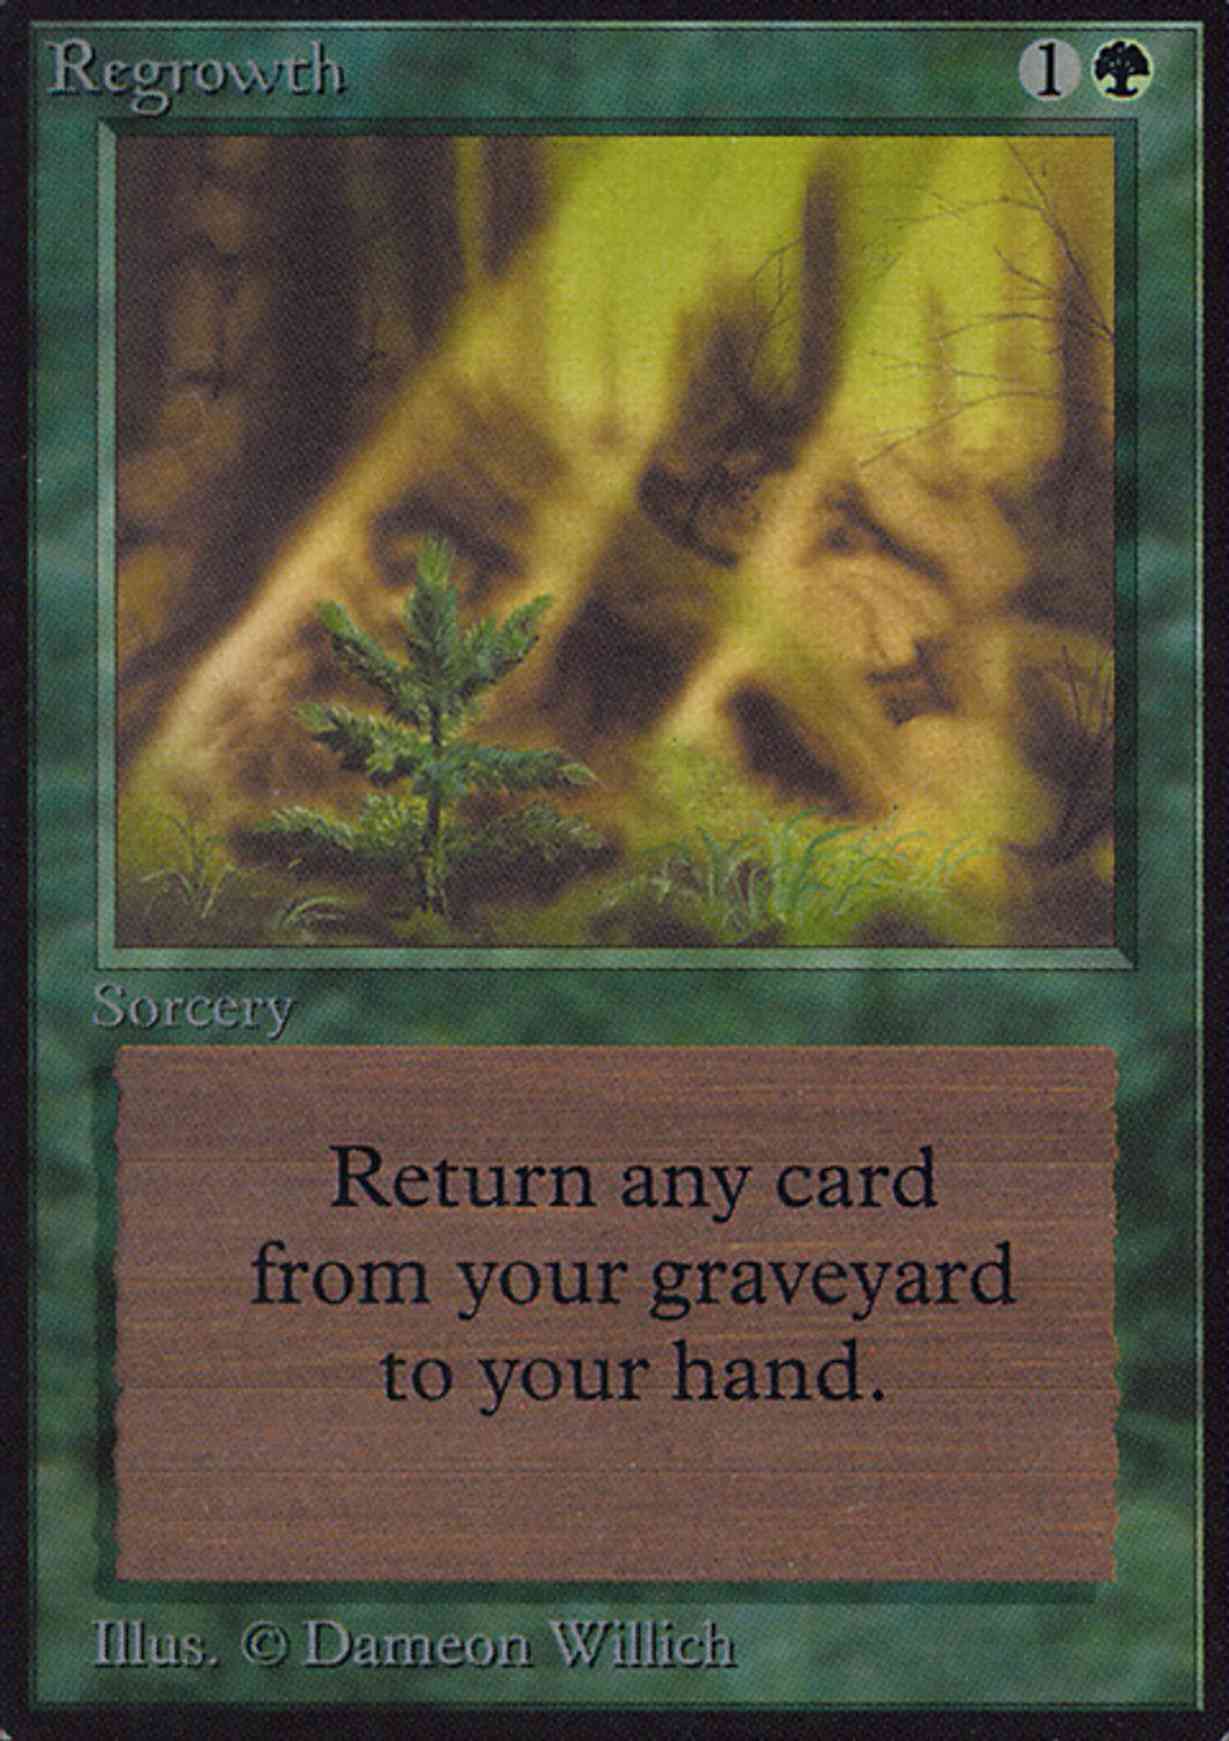 Regrowth magic card front